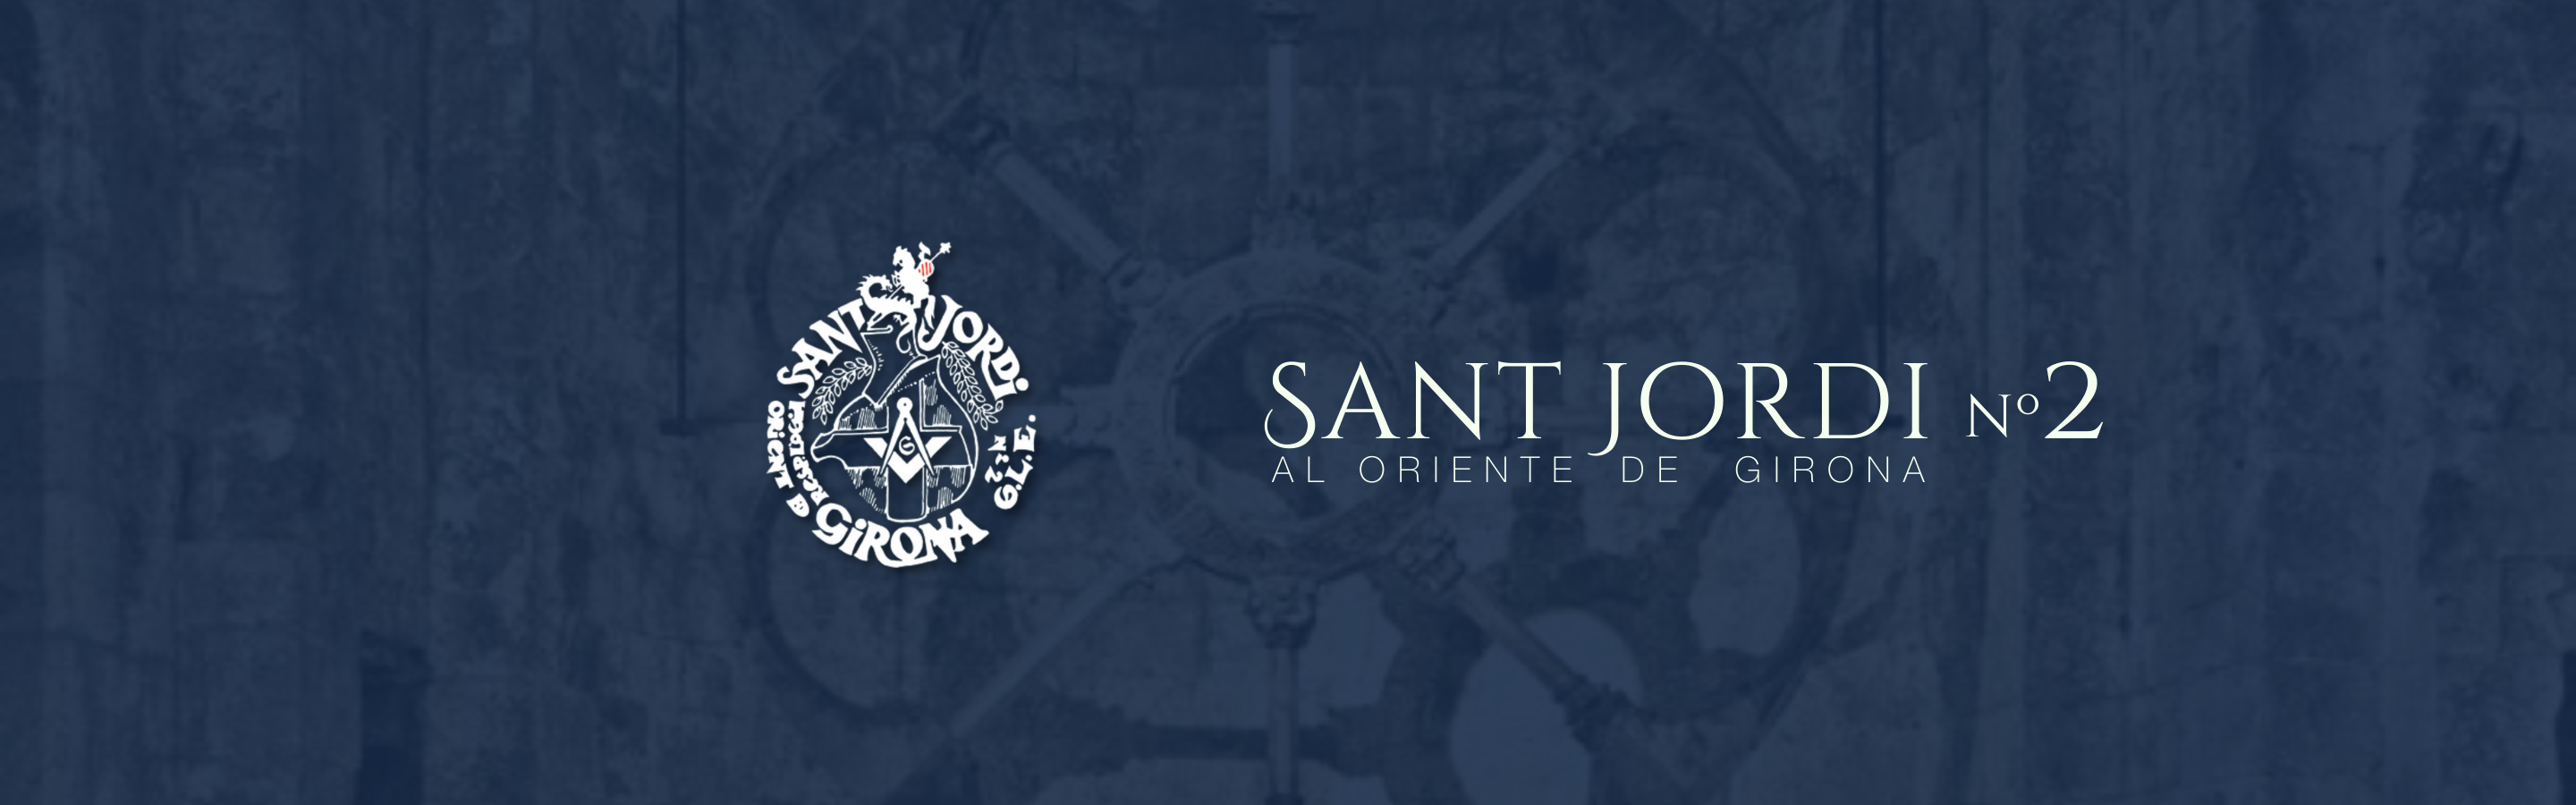 Respetable Logia Sant Jordi nº2 al Oriente de Girona